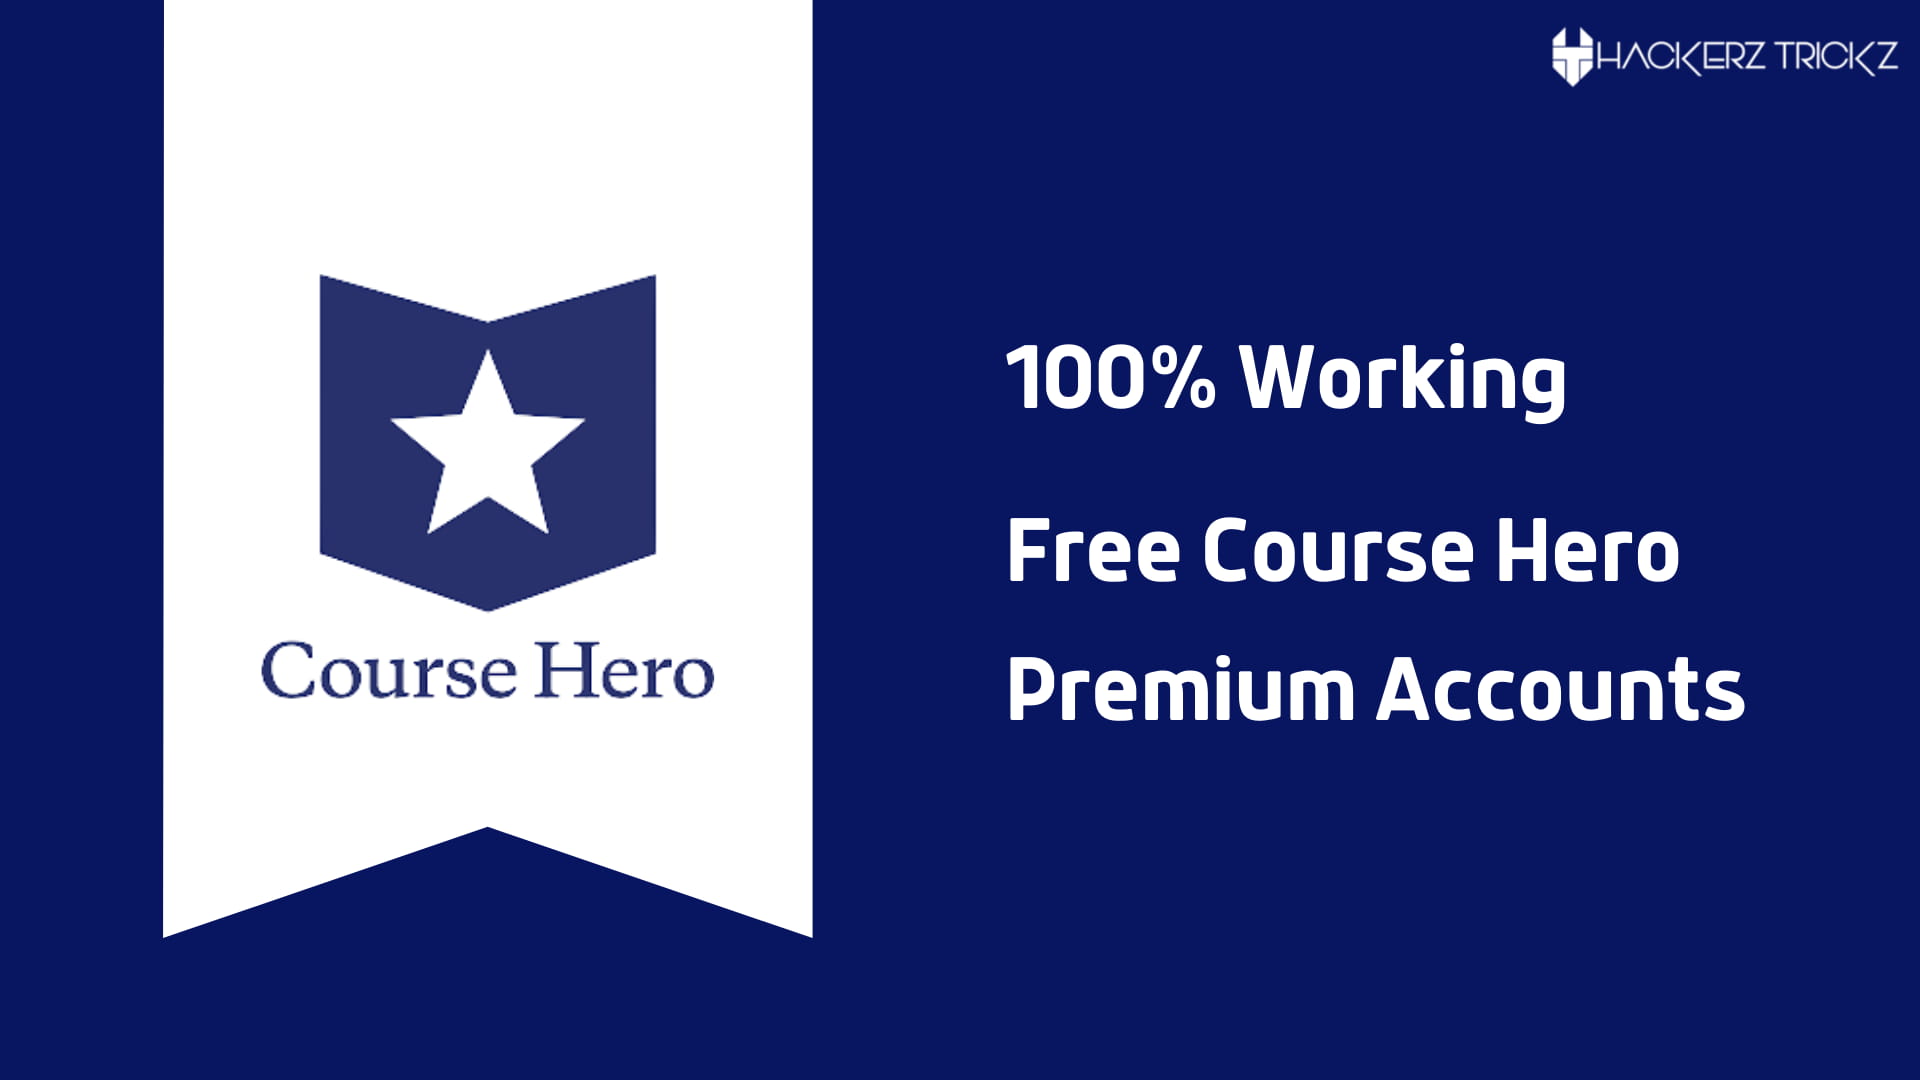 100% Working Free Course Hero Premium Accounts